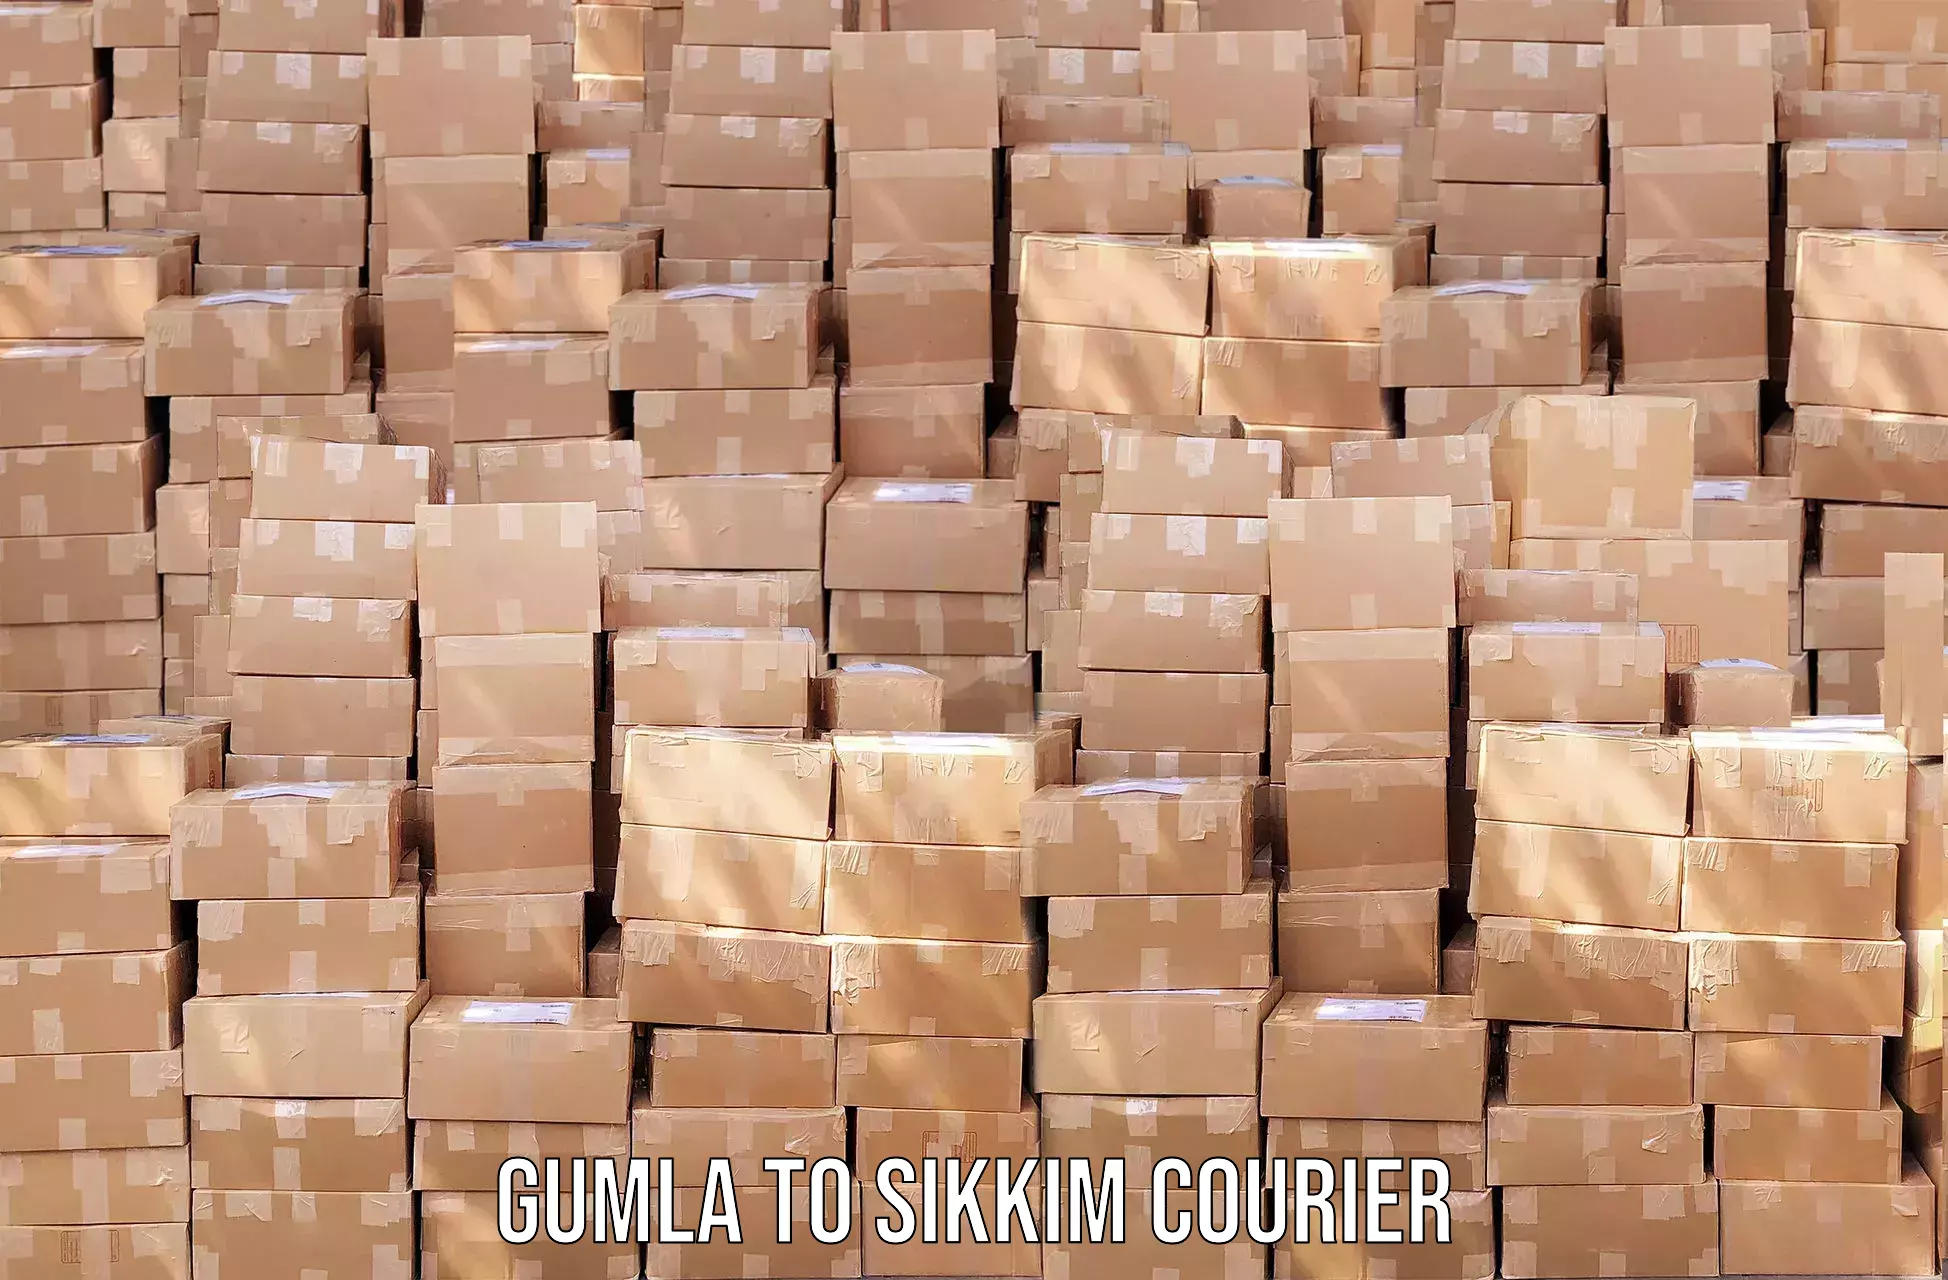 Discounted shipping Gumla to Gangtok